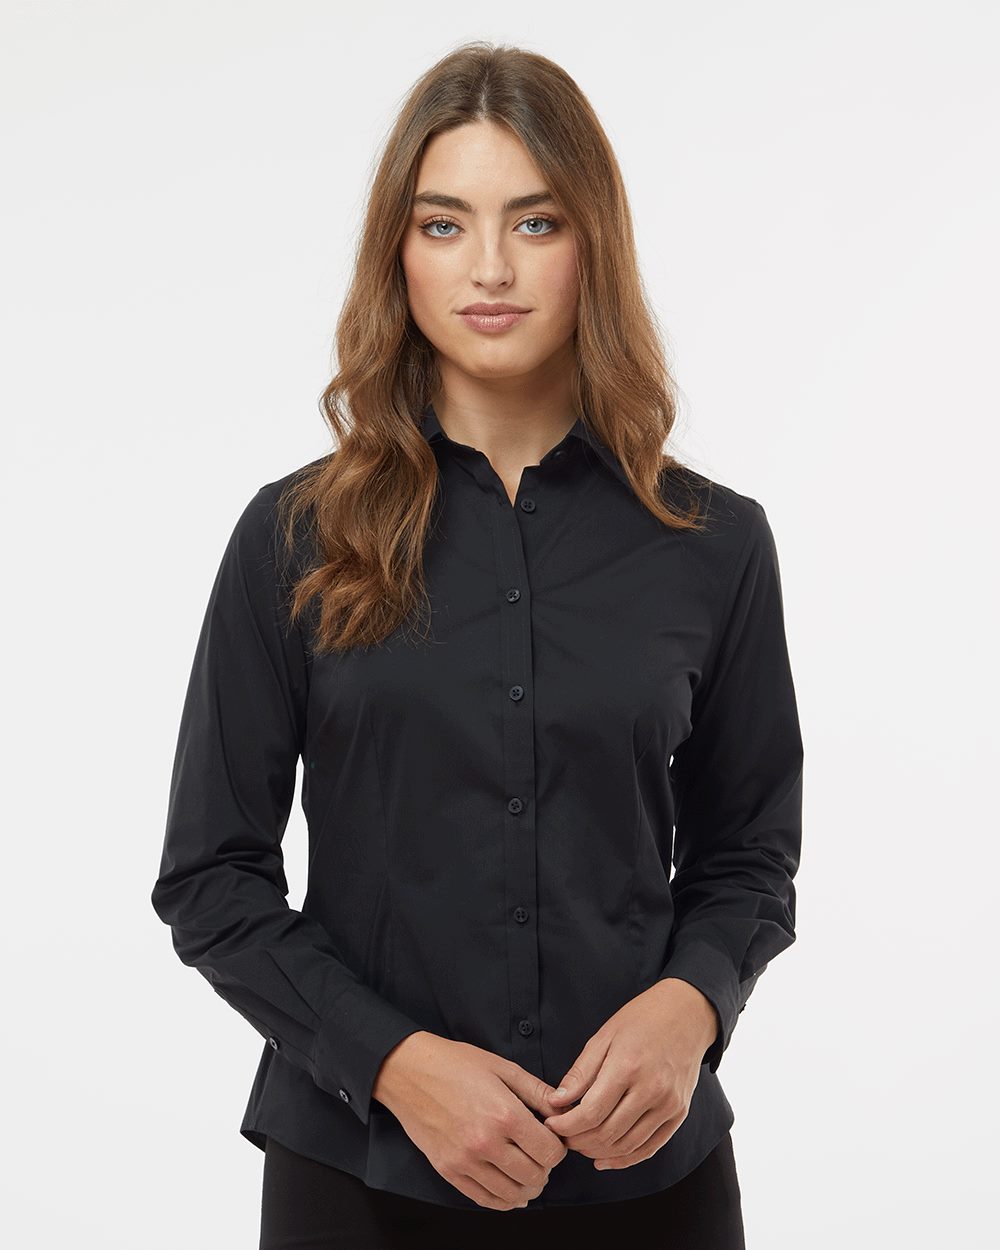 Van Heusen 13V0480 - Women's Stainshield Essential Shirt